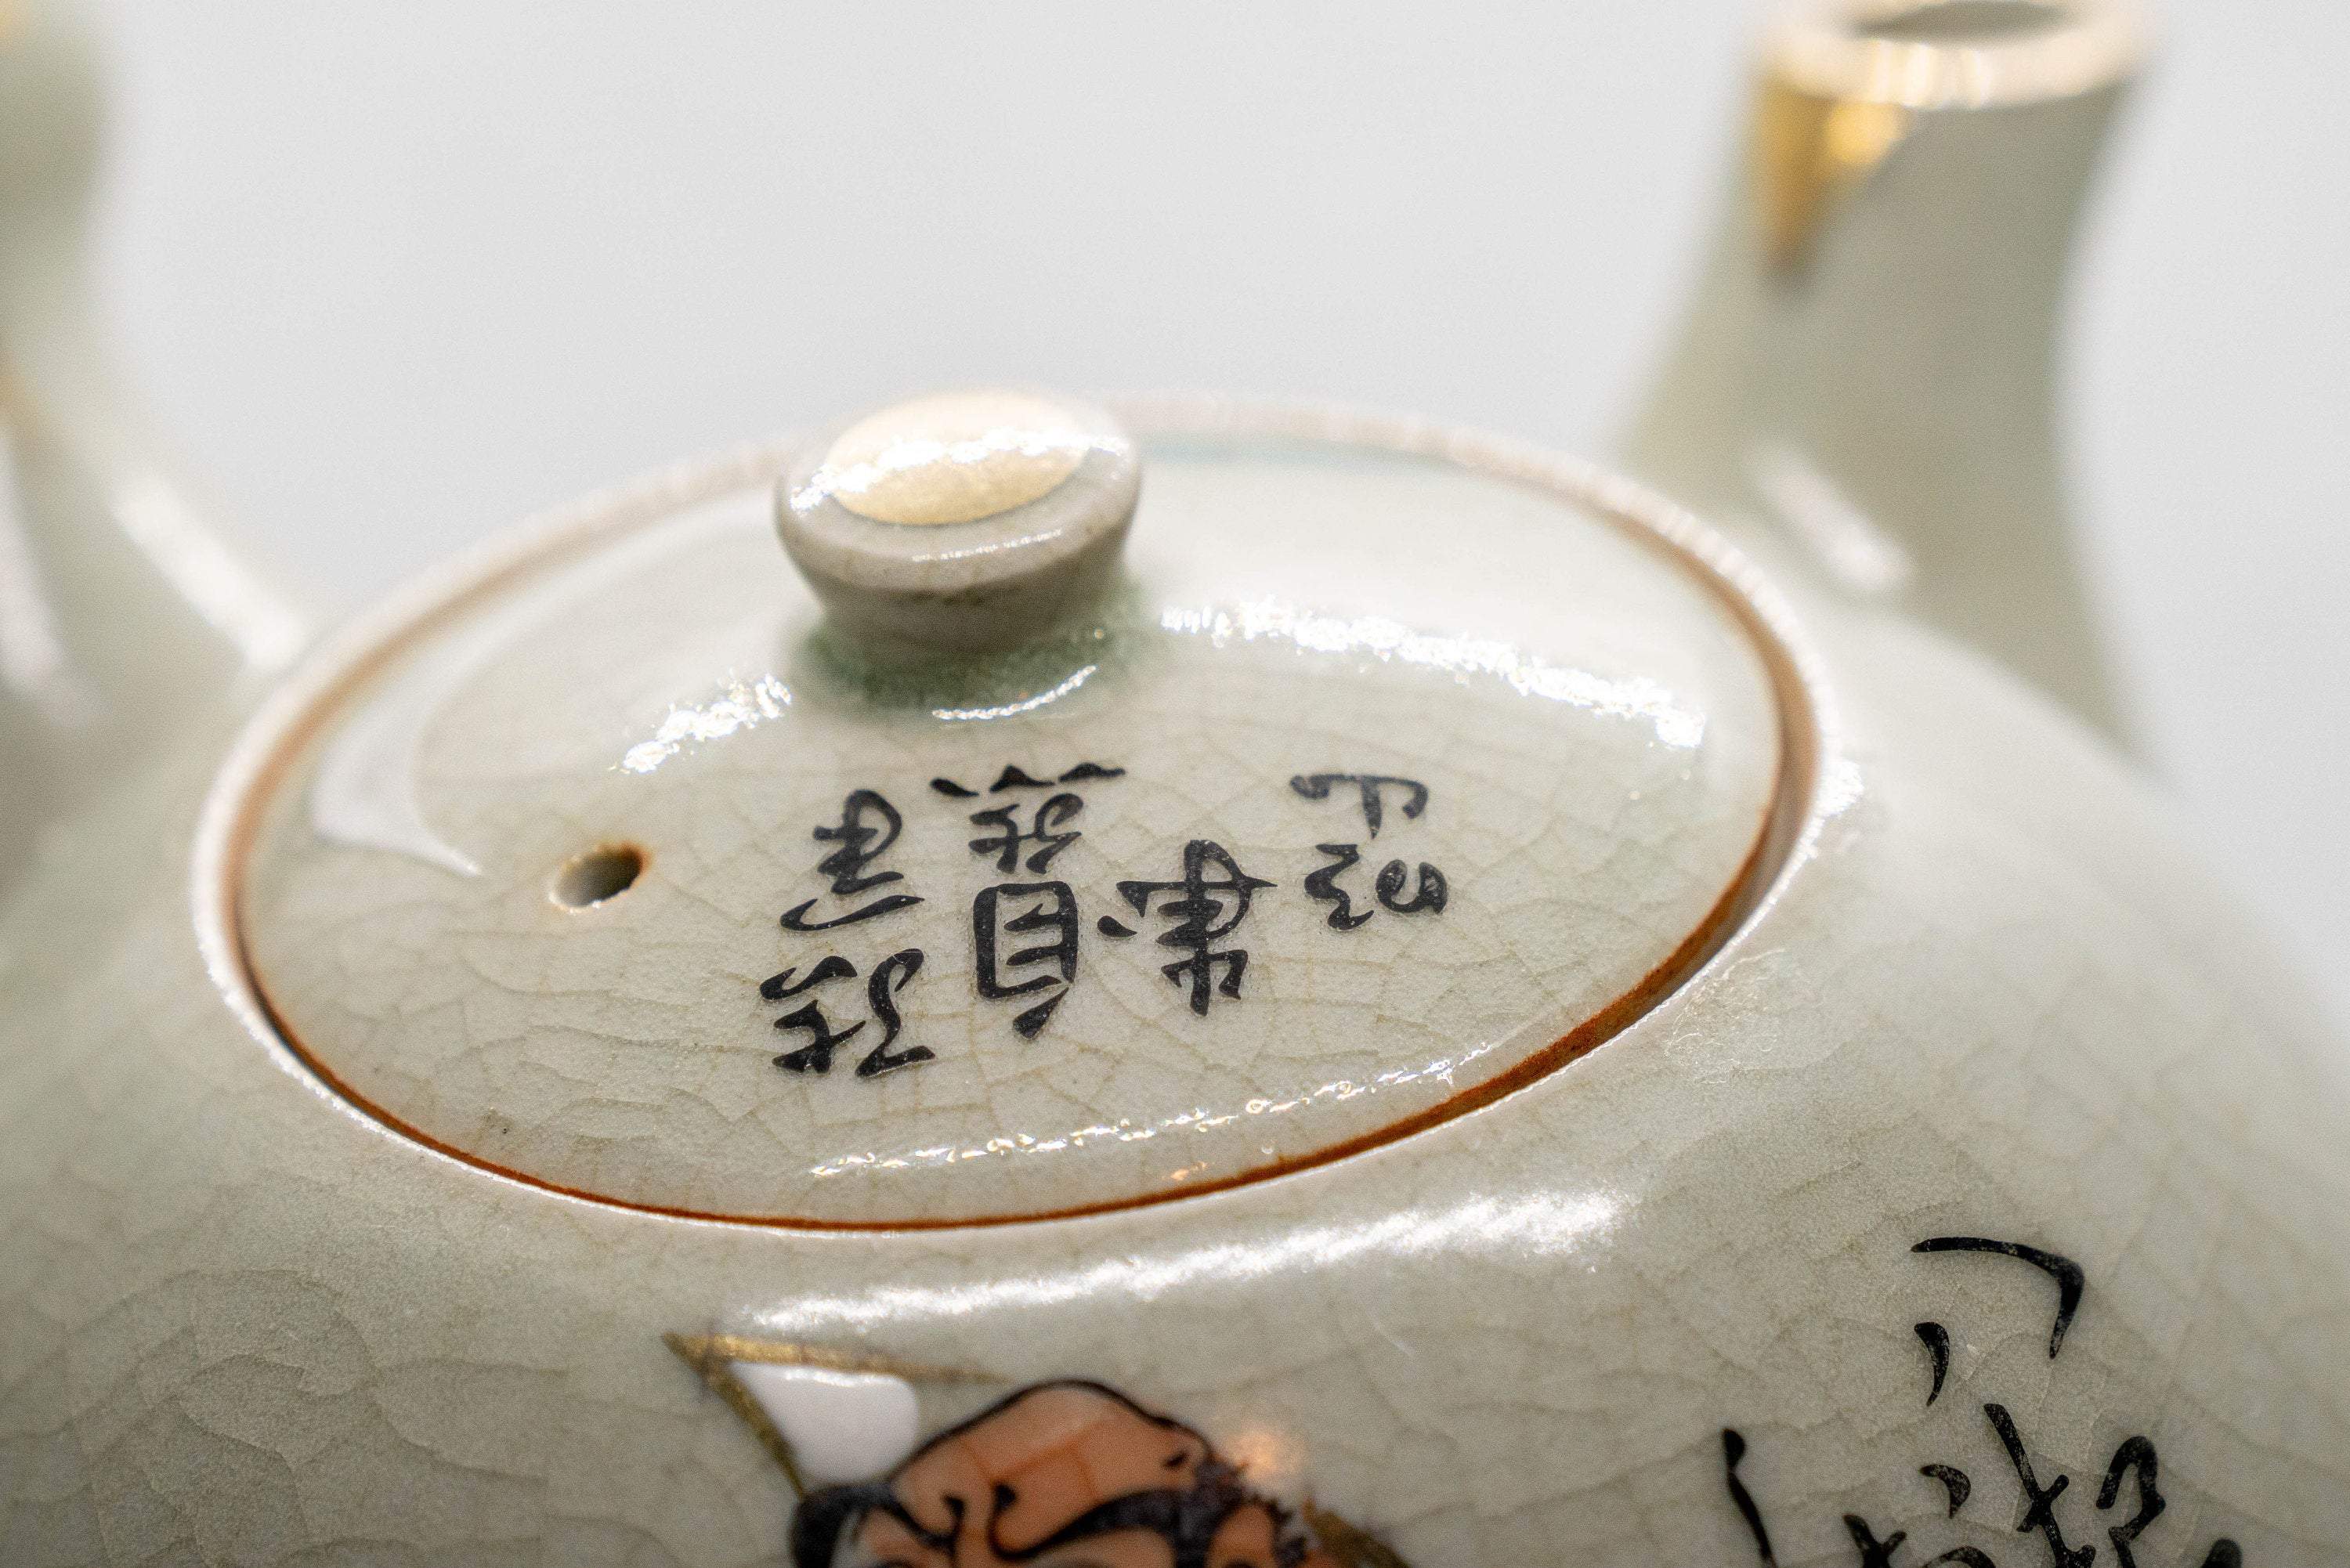 Japanese Kyusu - Maru-gata Teapot with Calligraphy, Gilding, and Painted Figures - 450ml - Tezumi